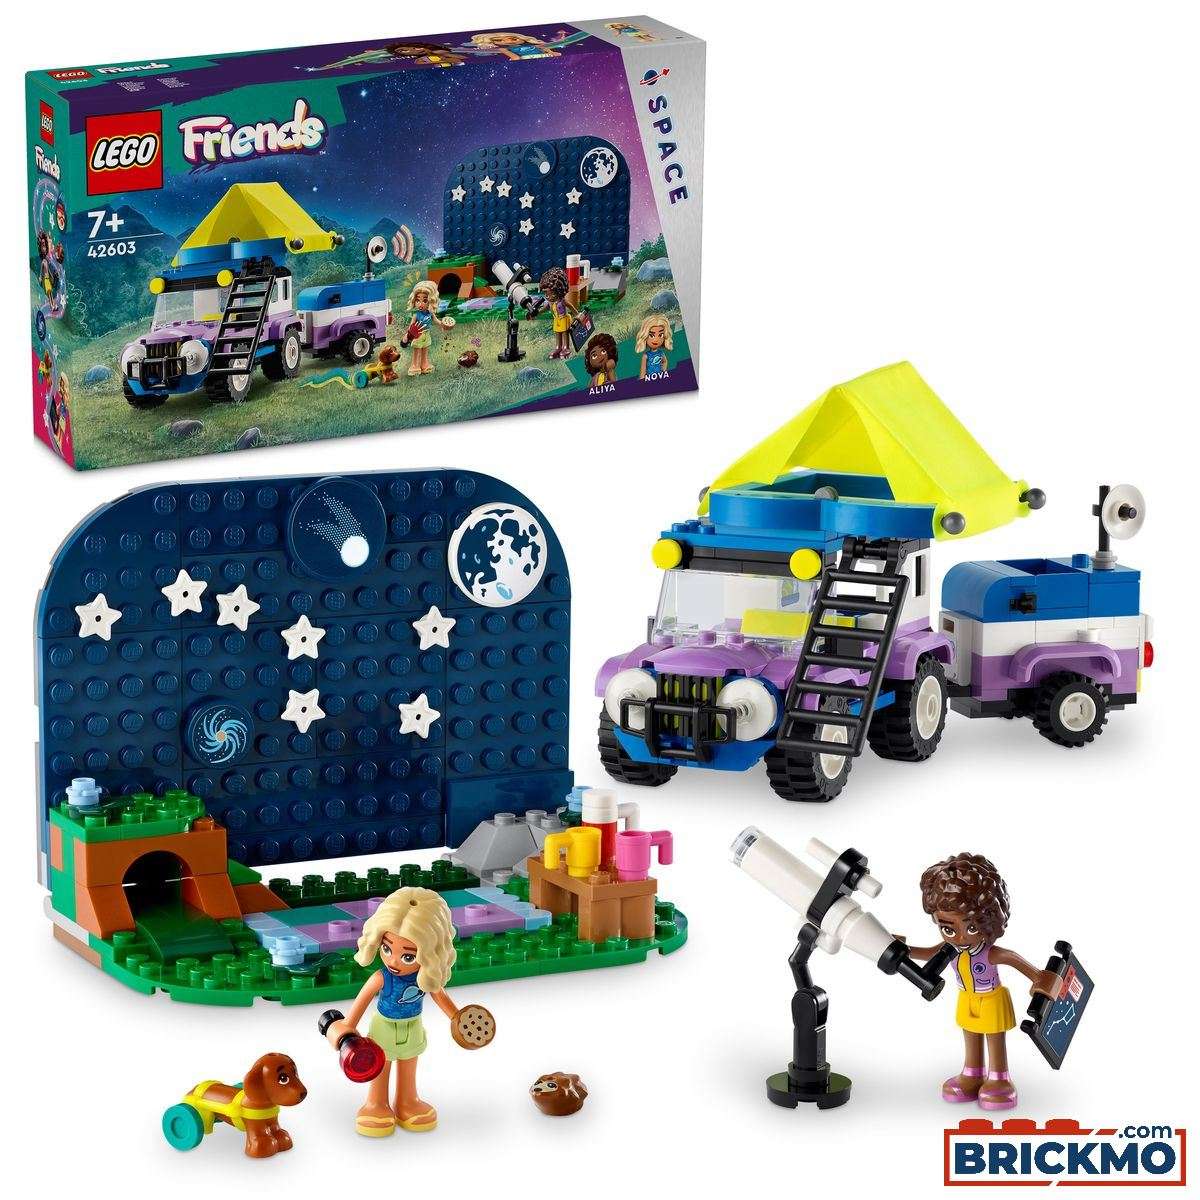 LEGO Friends 42603 Sterngucker-Campingfahrzeug 42603